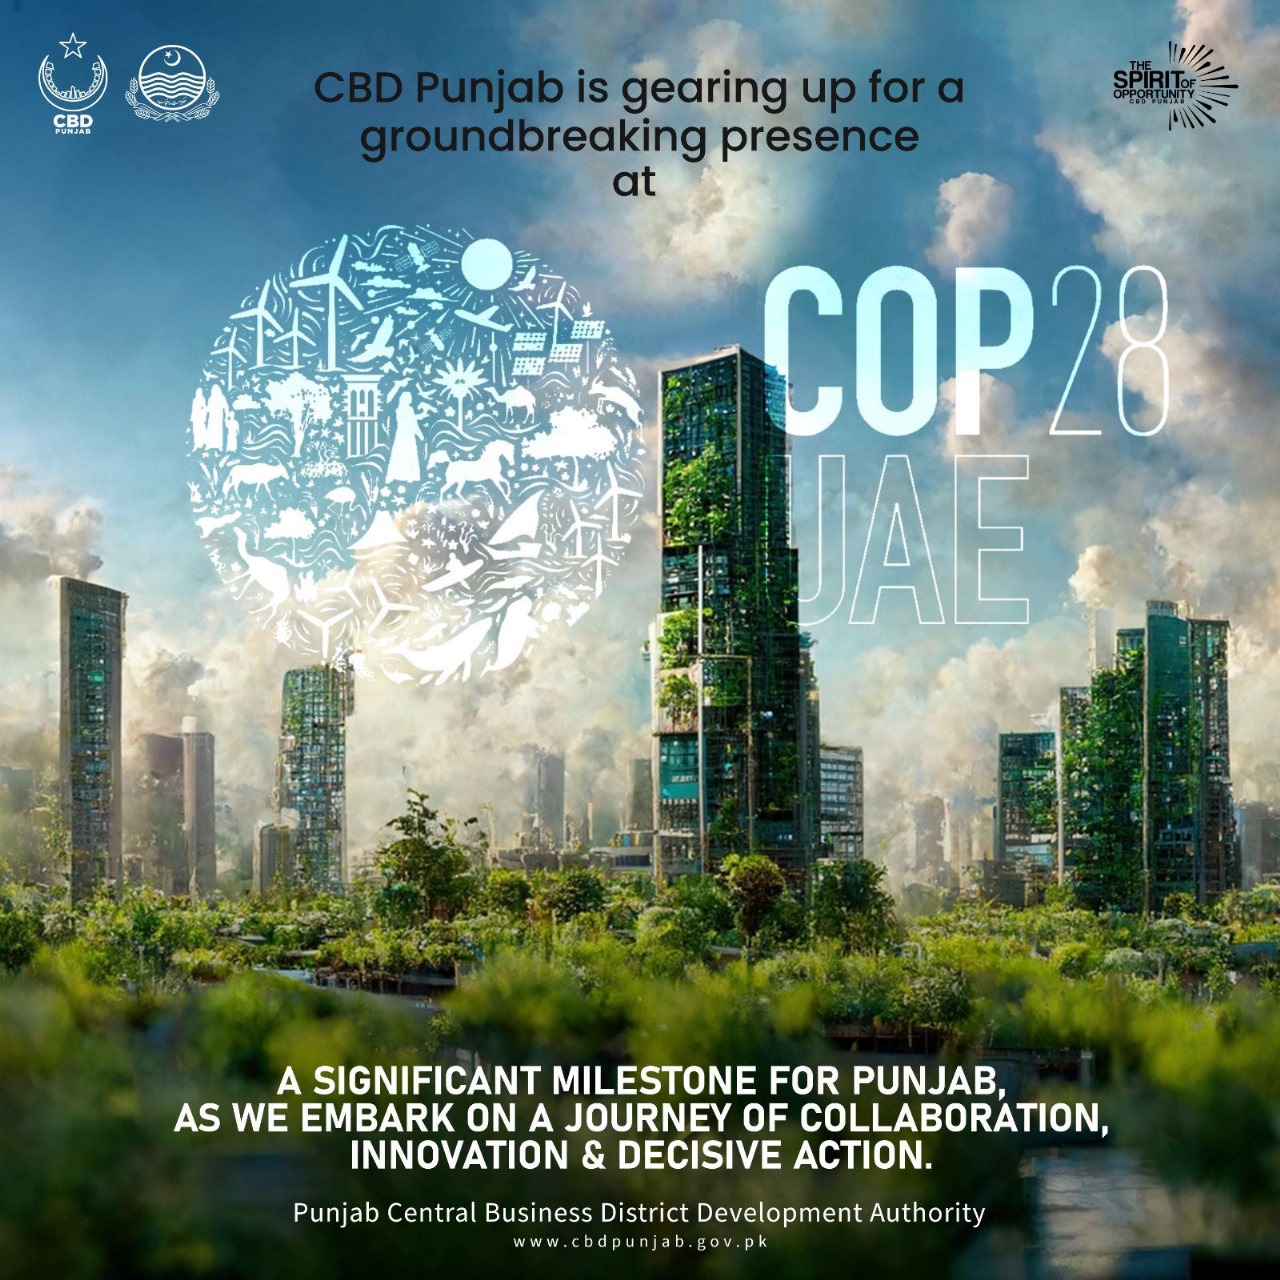 COP28, PARIS AGREEMENT, AND SUSTAINABLE INITIATIVES IN CBD PUNJAB